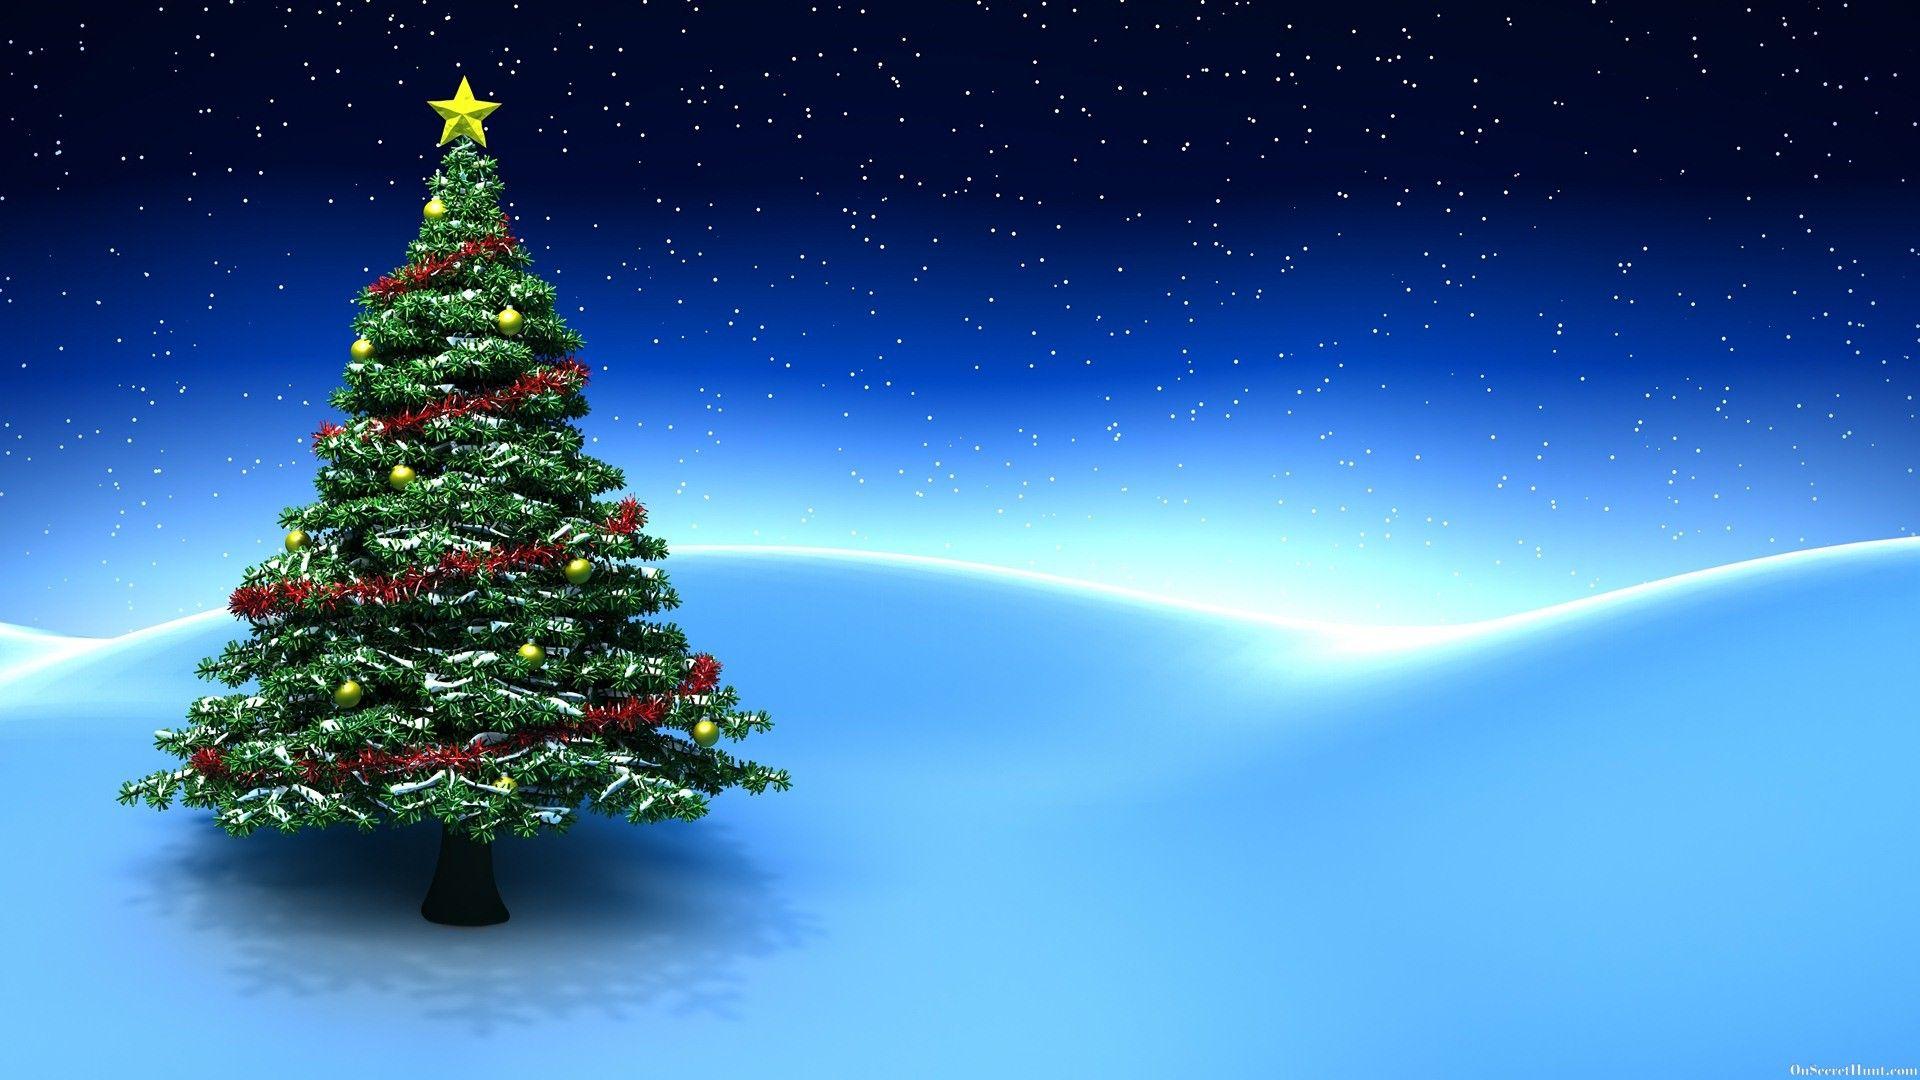 Beautiful Christmas Tree Wallpaper. Christmas tree